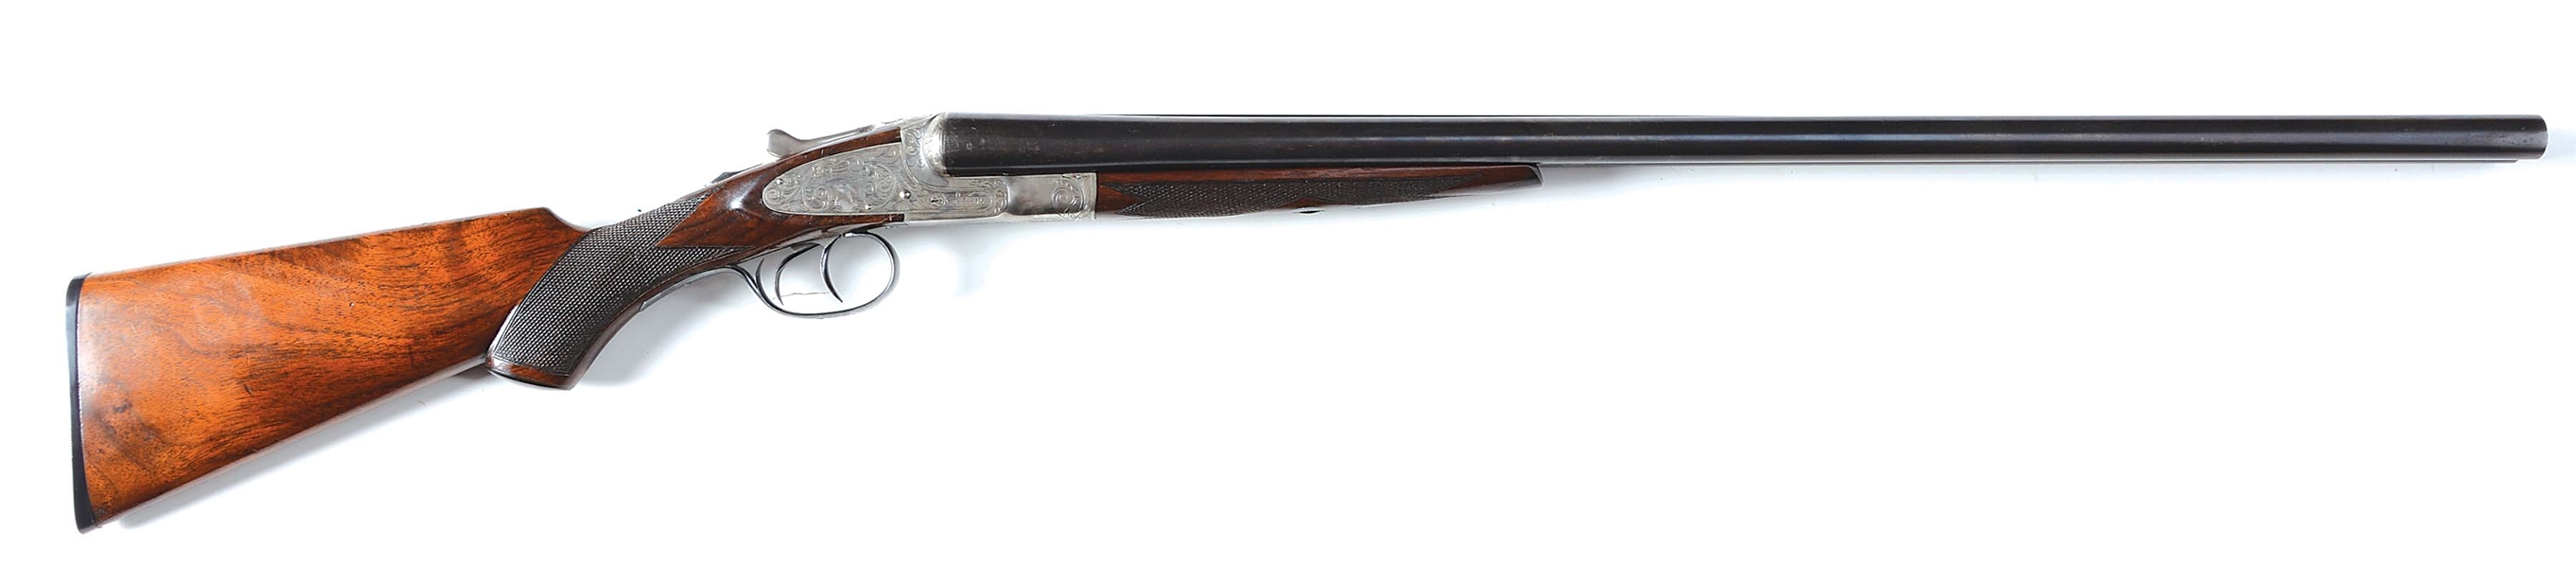 (C) LOVELY L.C. SMITH SPECIALTY SXS 12 GAUGE HAMMERLESS SHOTGUN (1925).